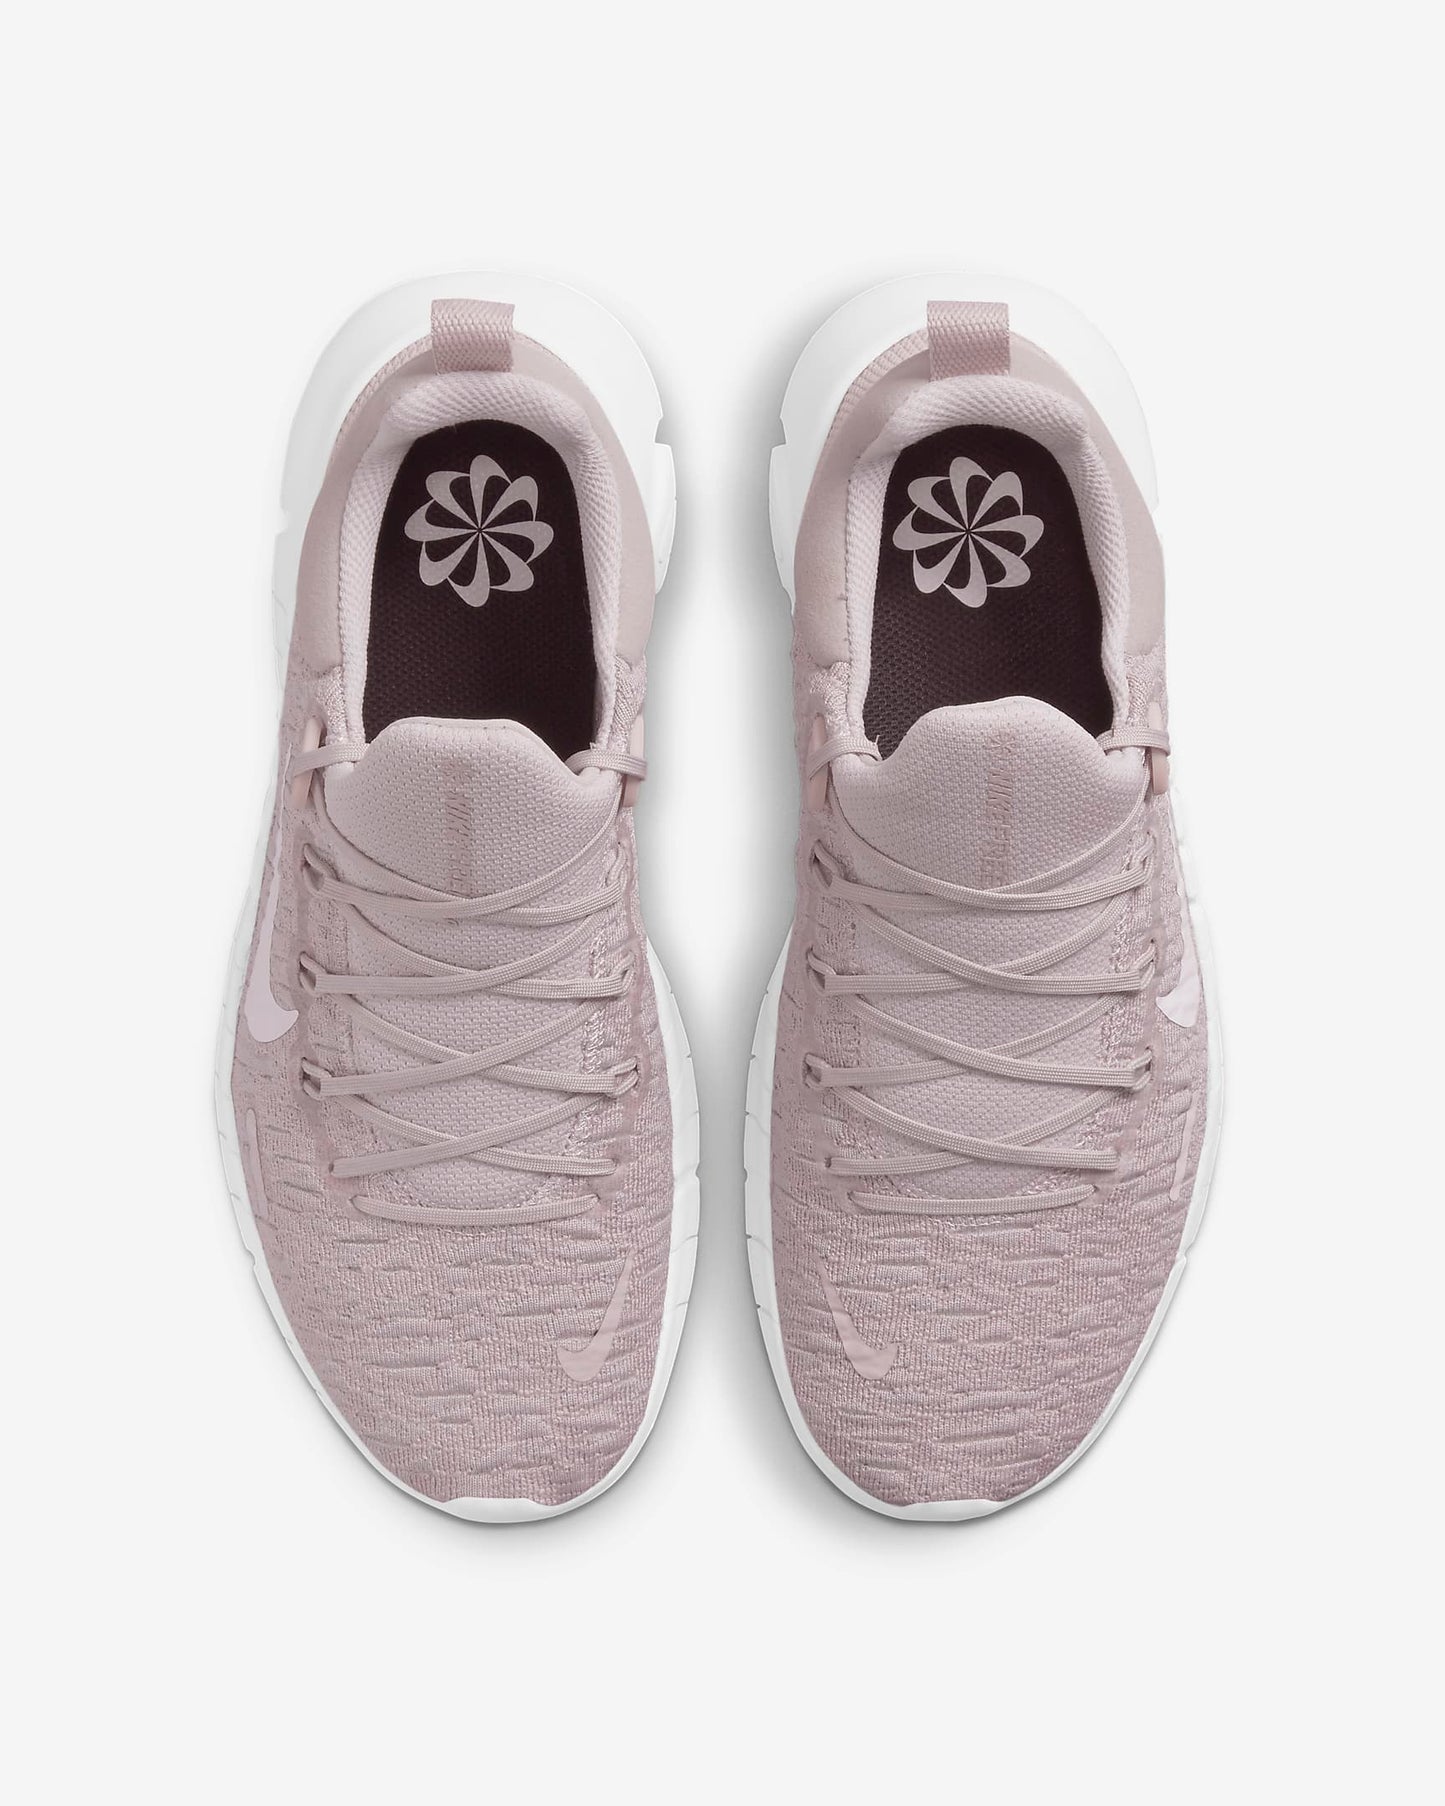 Nike Women's Free Run 5.0, Platinum Violet/Champagne/White